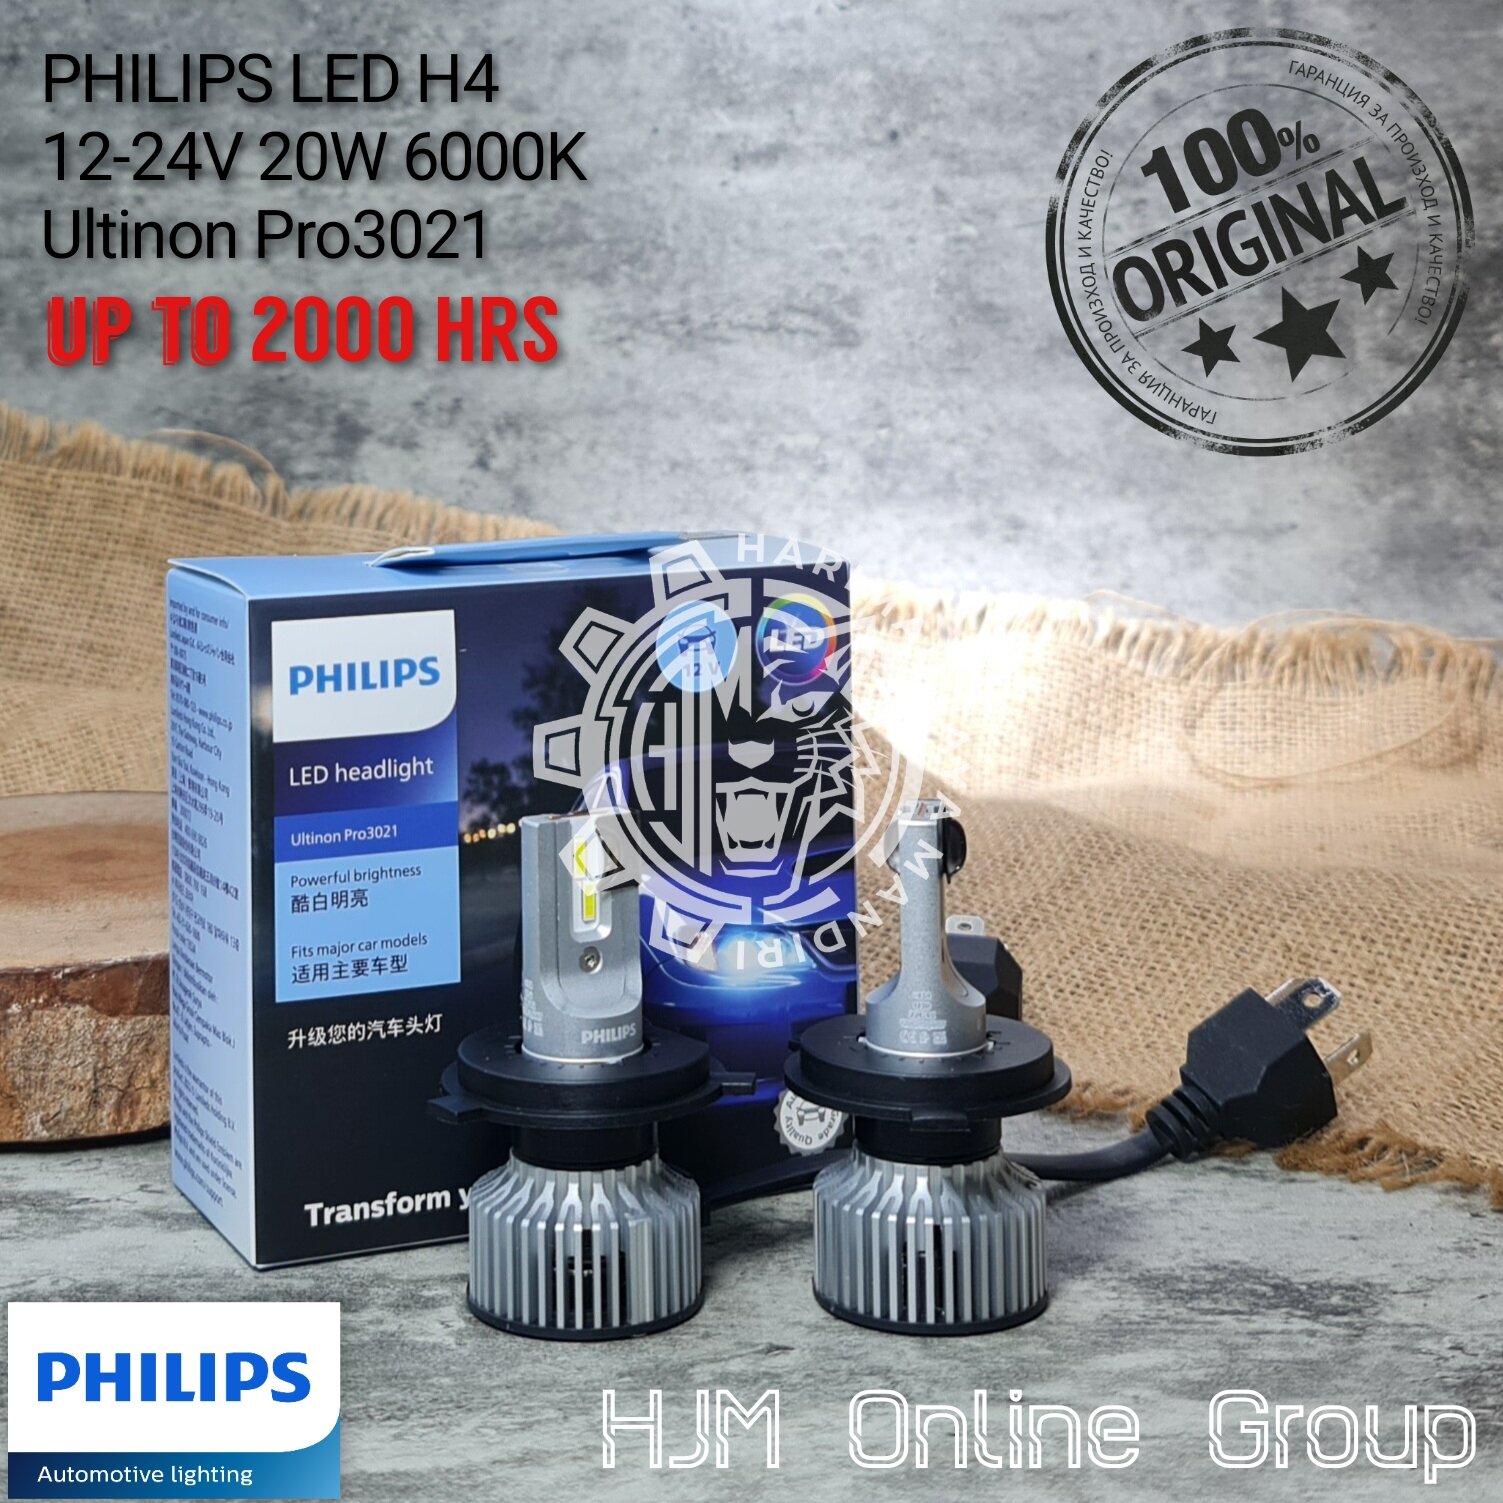 Philips H7 Ultinon Pro3021 Led 12V 24V 20W 6000K